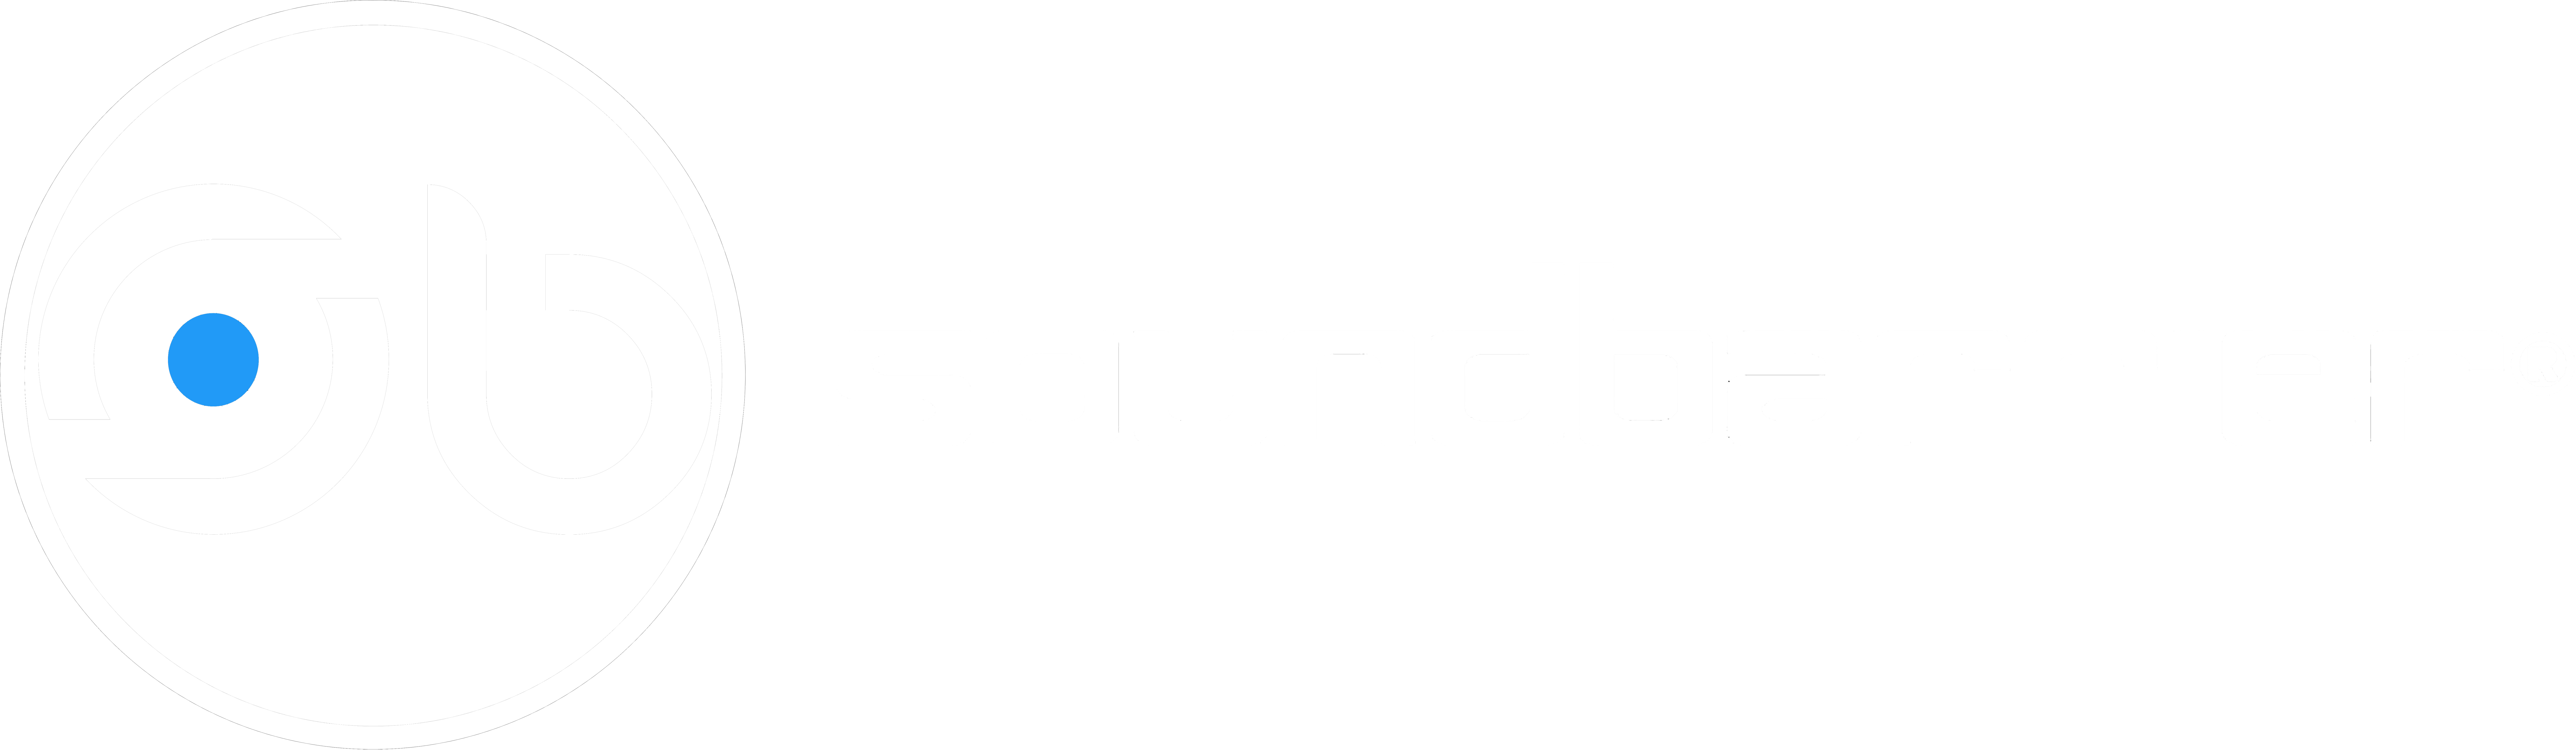 soundbarrierlogo.png